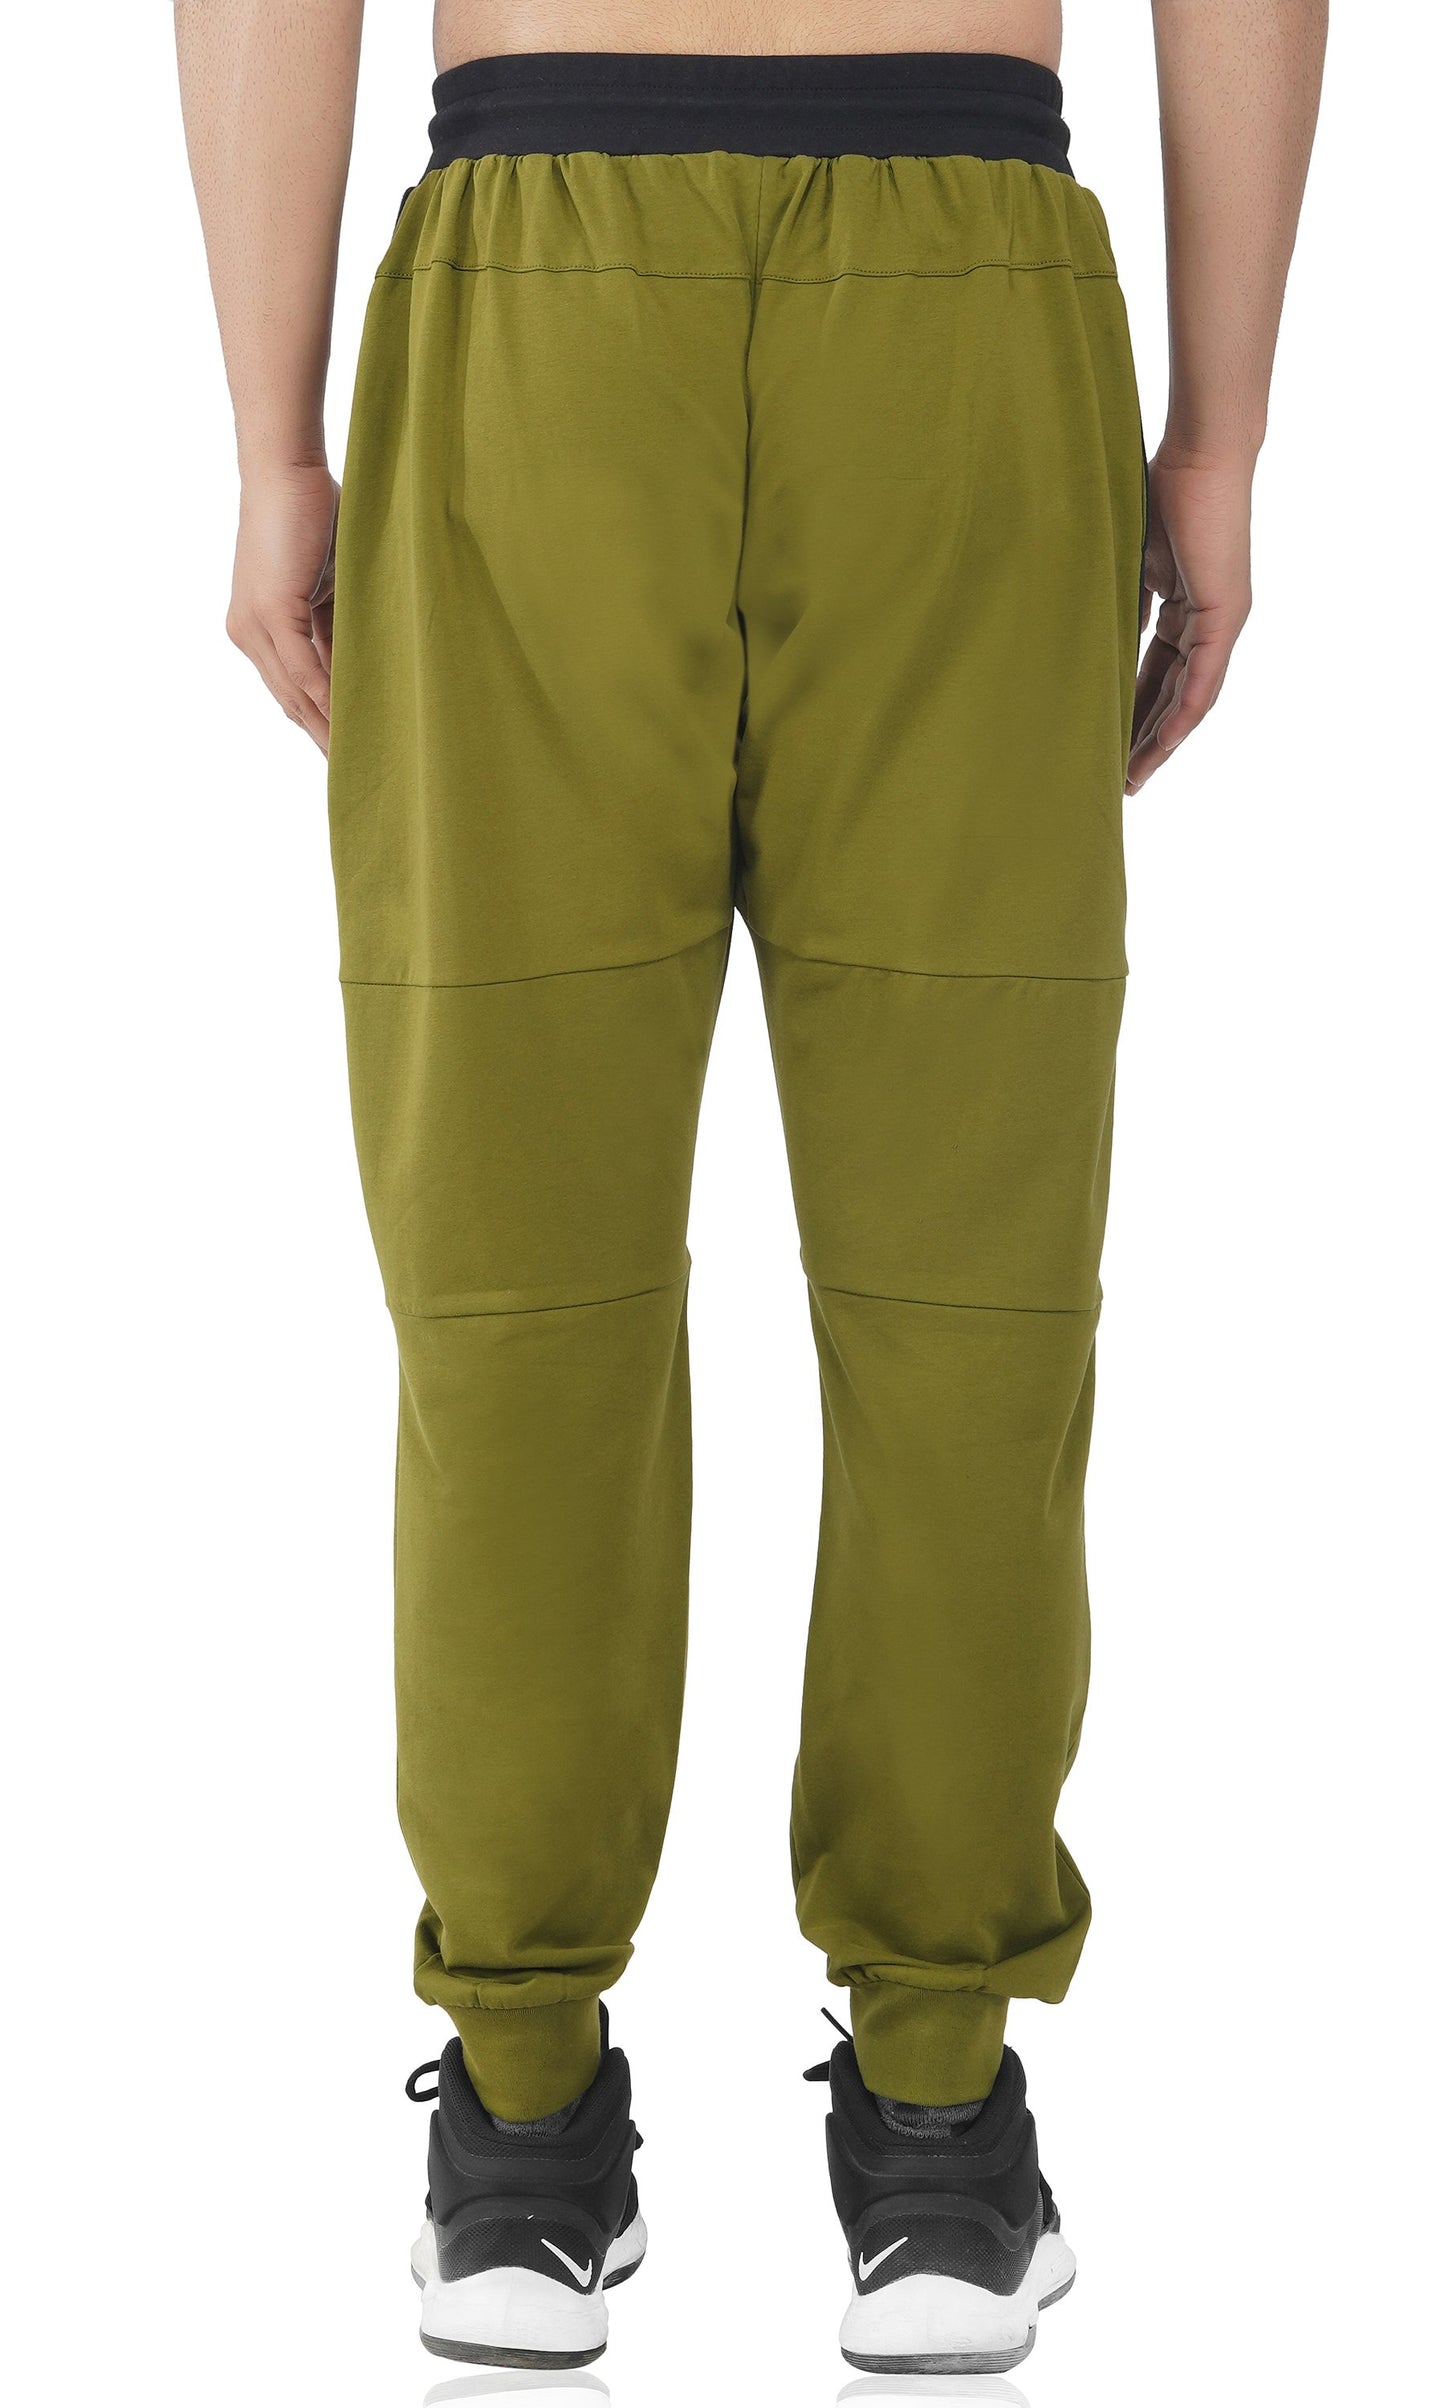 SLAY. Men's Olive Green Joggers-clothing-to-slay.myshopify.com-Joggers